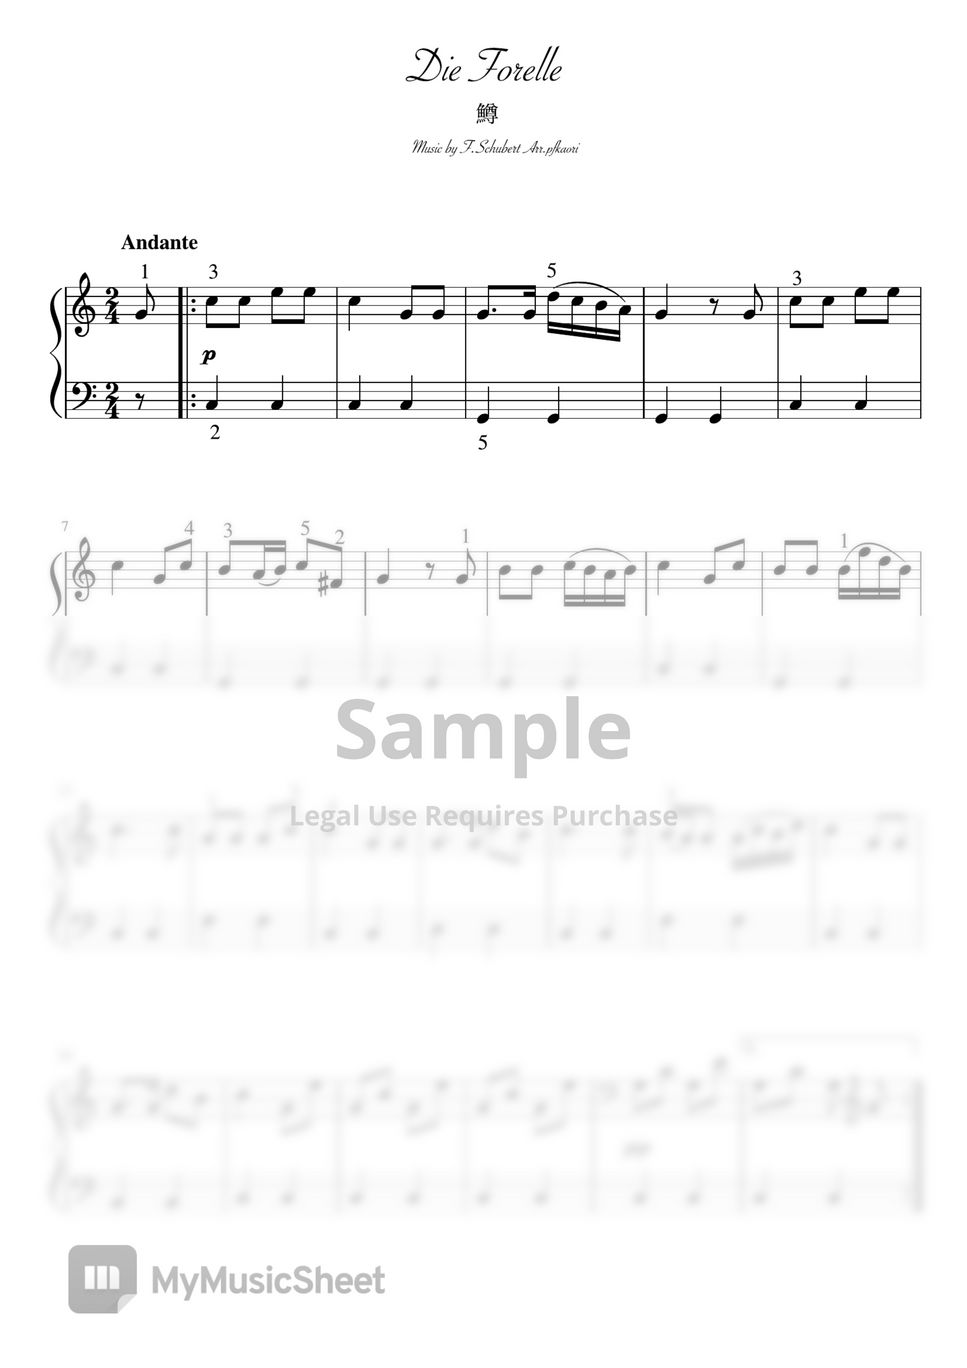 F.Schubert - Die Forelle (Cdur ・Easy pianosolo) by pfkaori